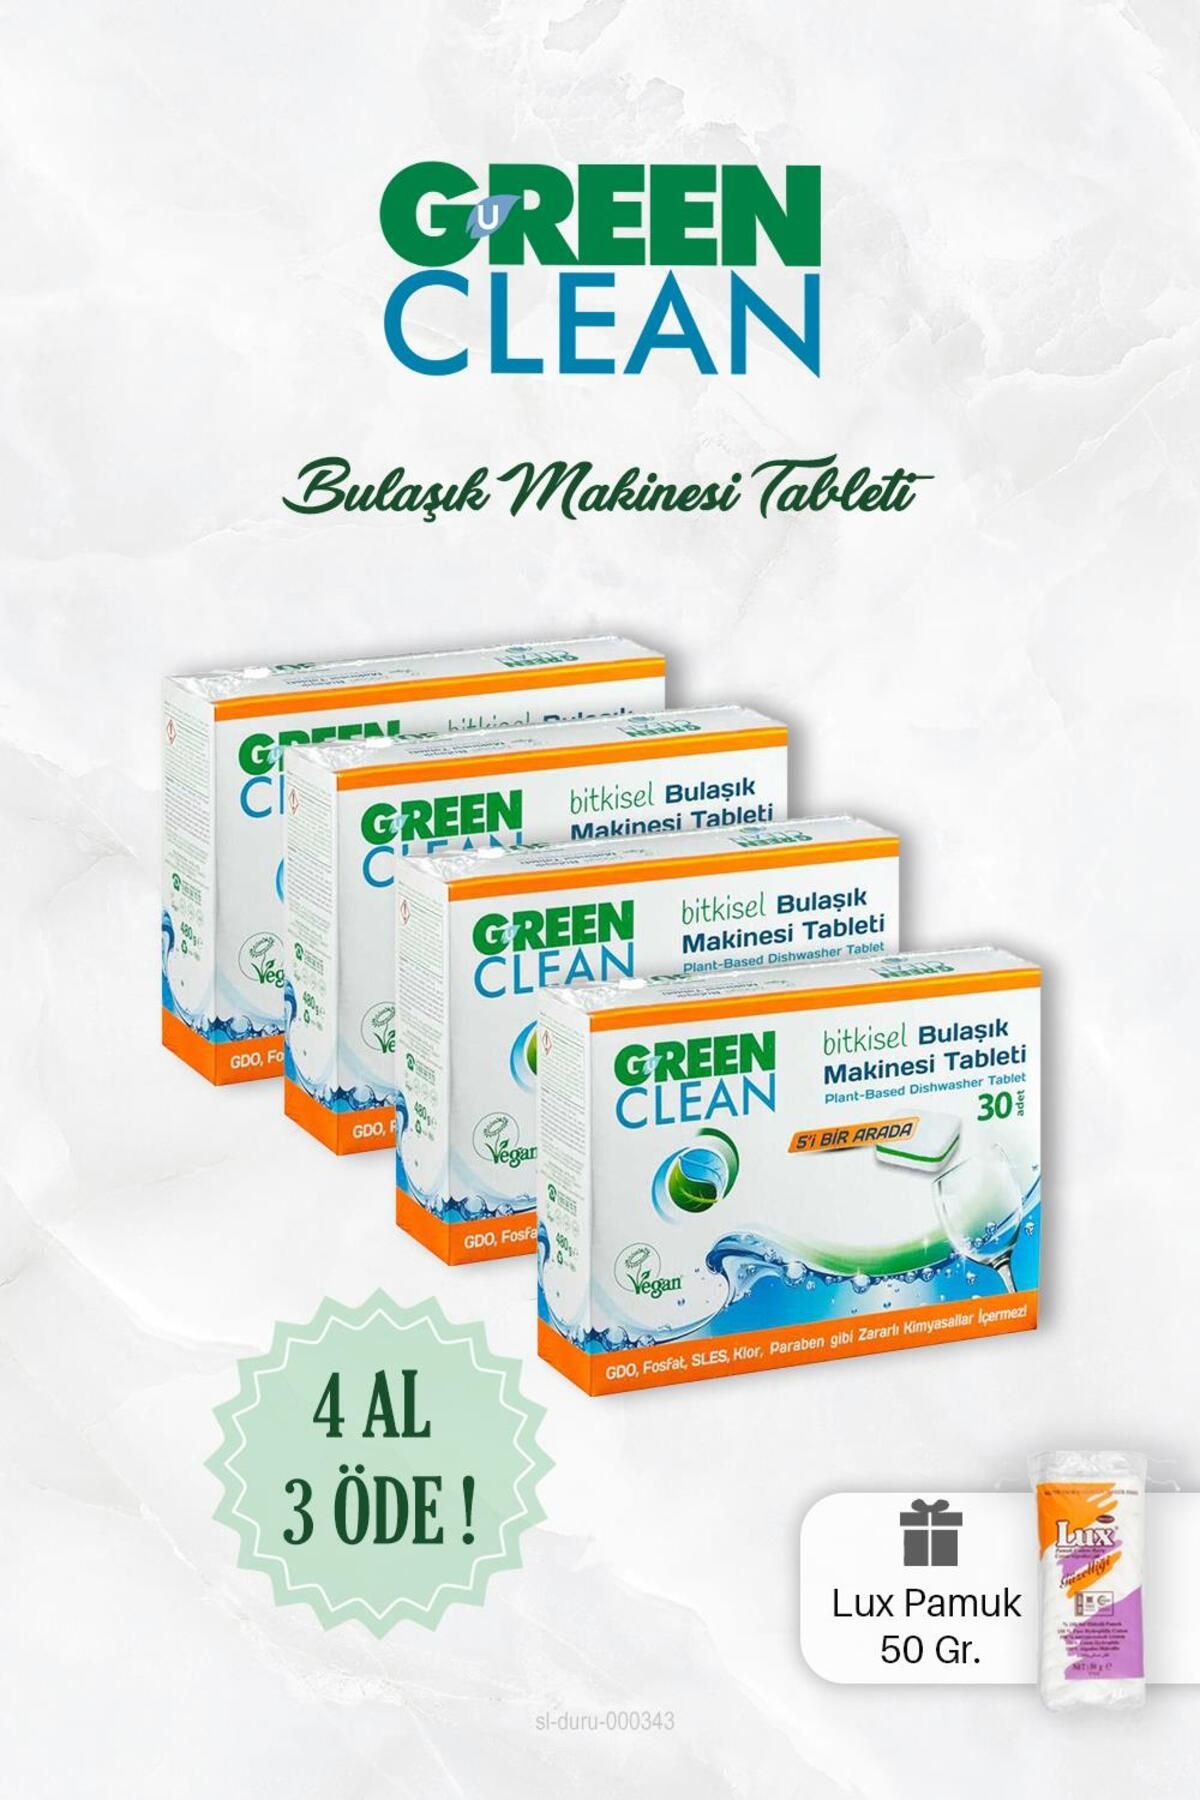 Green Clean 4 AL 3 Öde Bitkisel Bulaşık Tableti 30 Adet